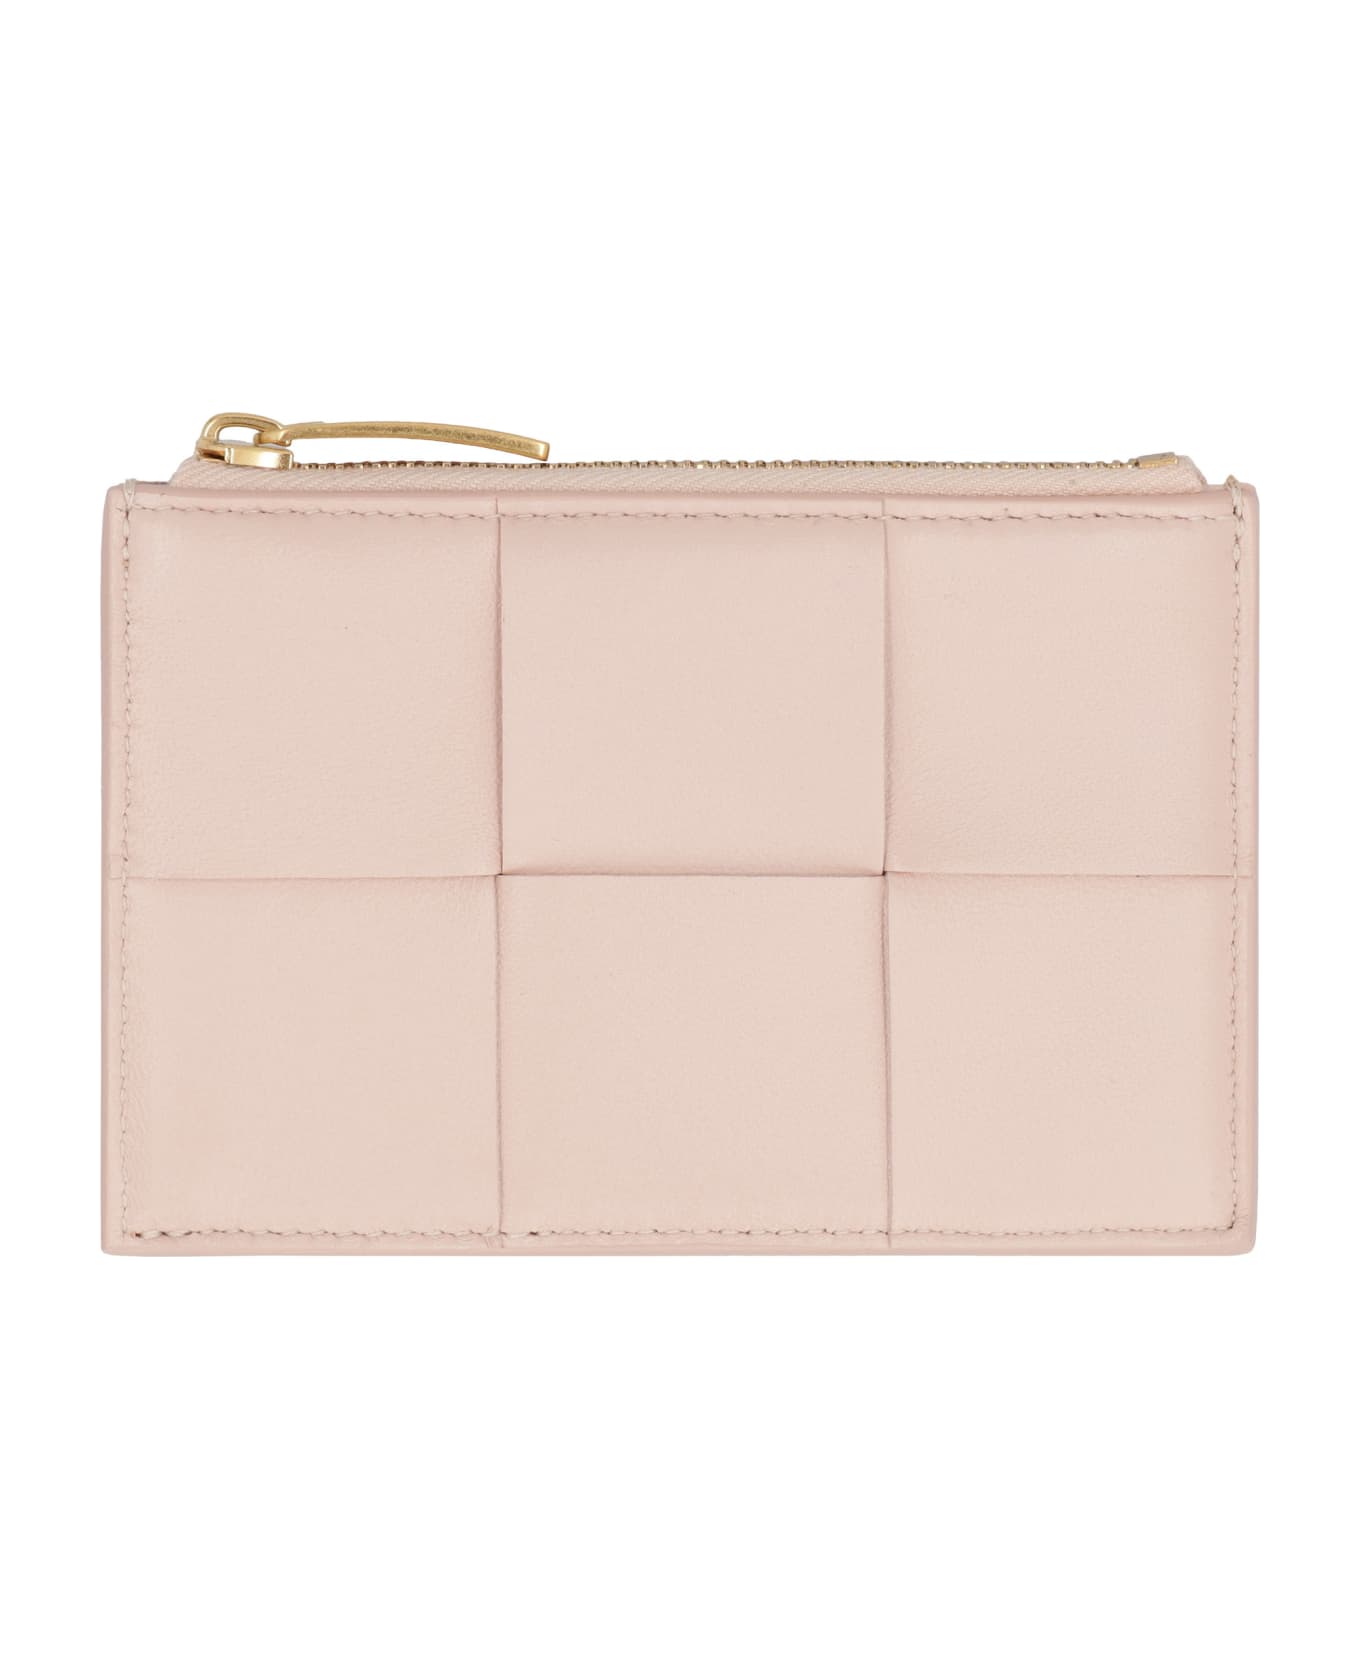 Bottega Veneta Leather Card Holder - Pink